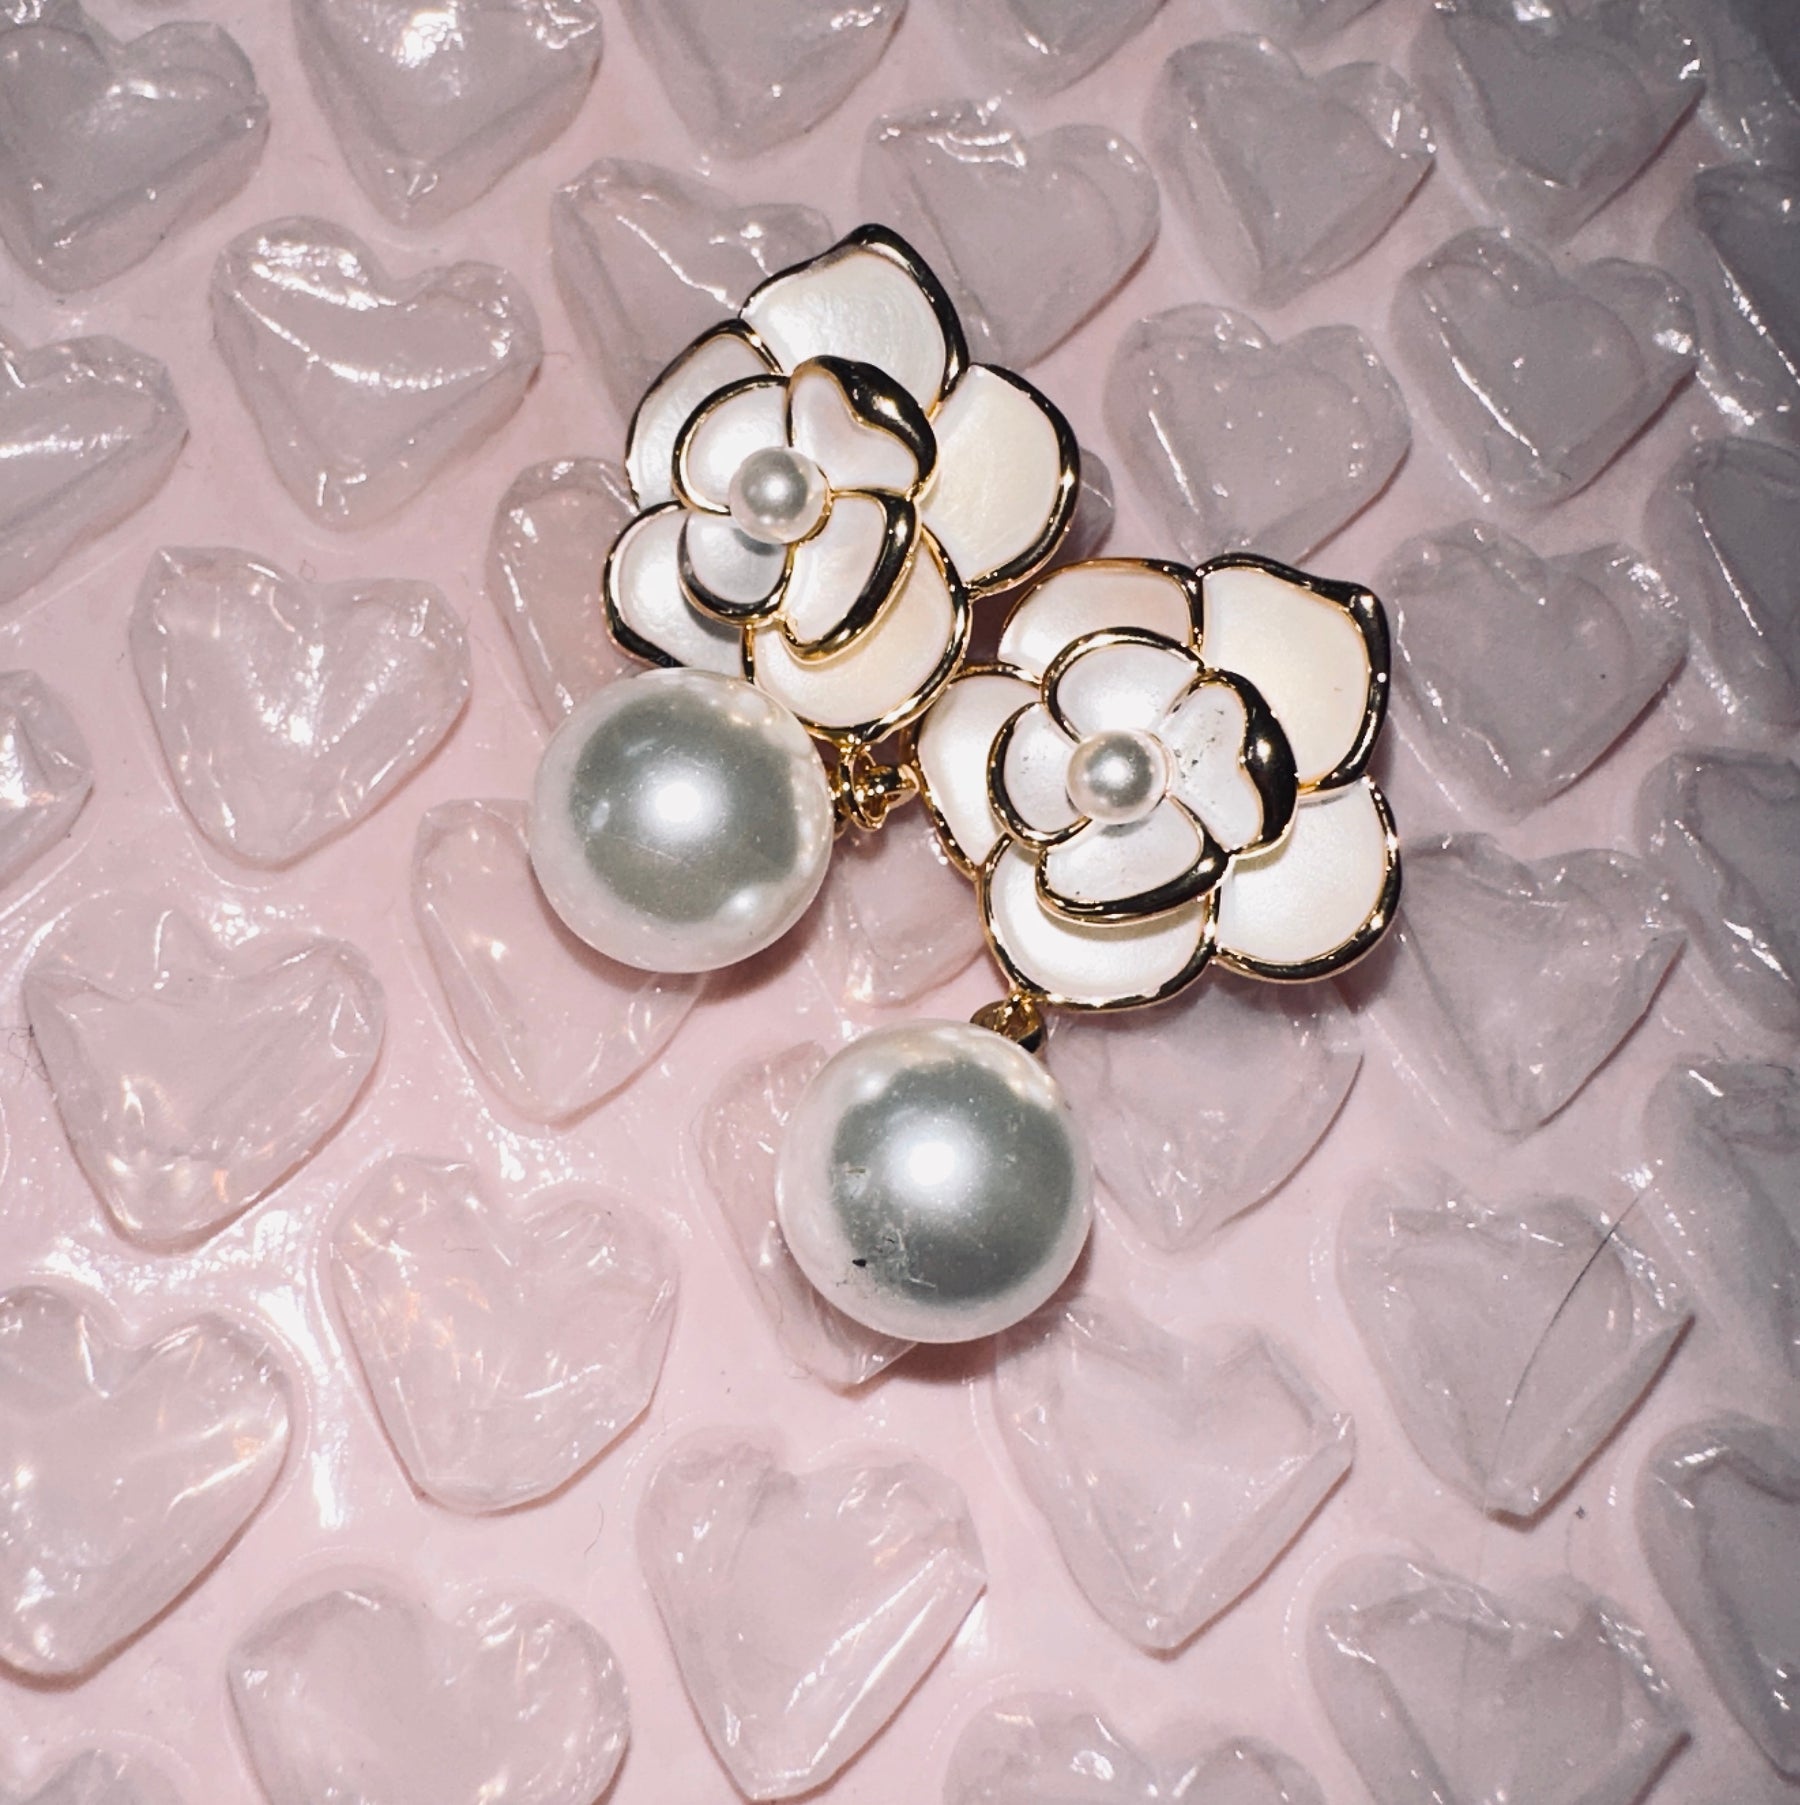 Vivian 44 white rose pearl earrings dangling alloy copper